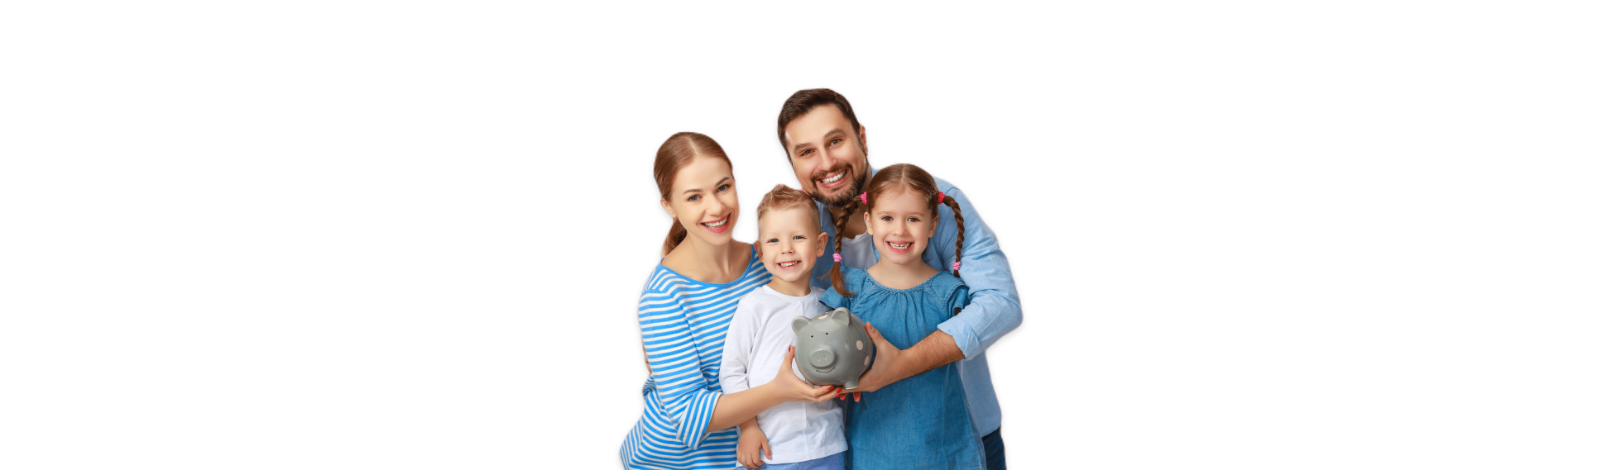 Family Act: il sostegno alle famiglie